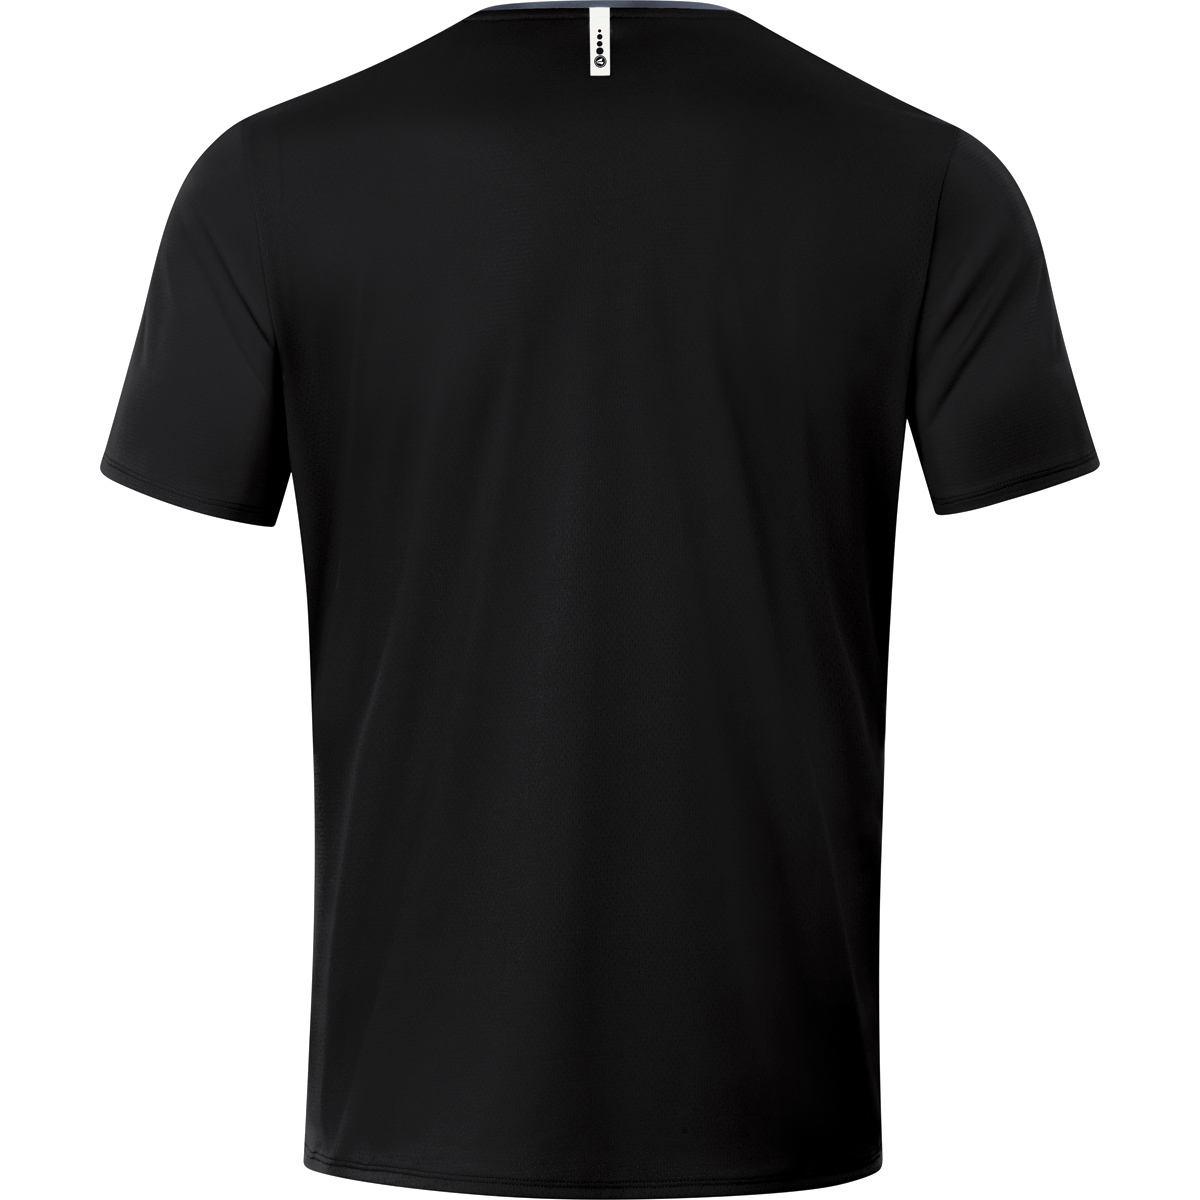 JAKO T-Shirt Champ 2.0 schwarz/anthrazit, 6120 128, Gr. Kinder